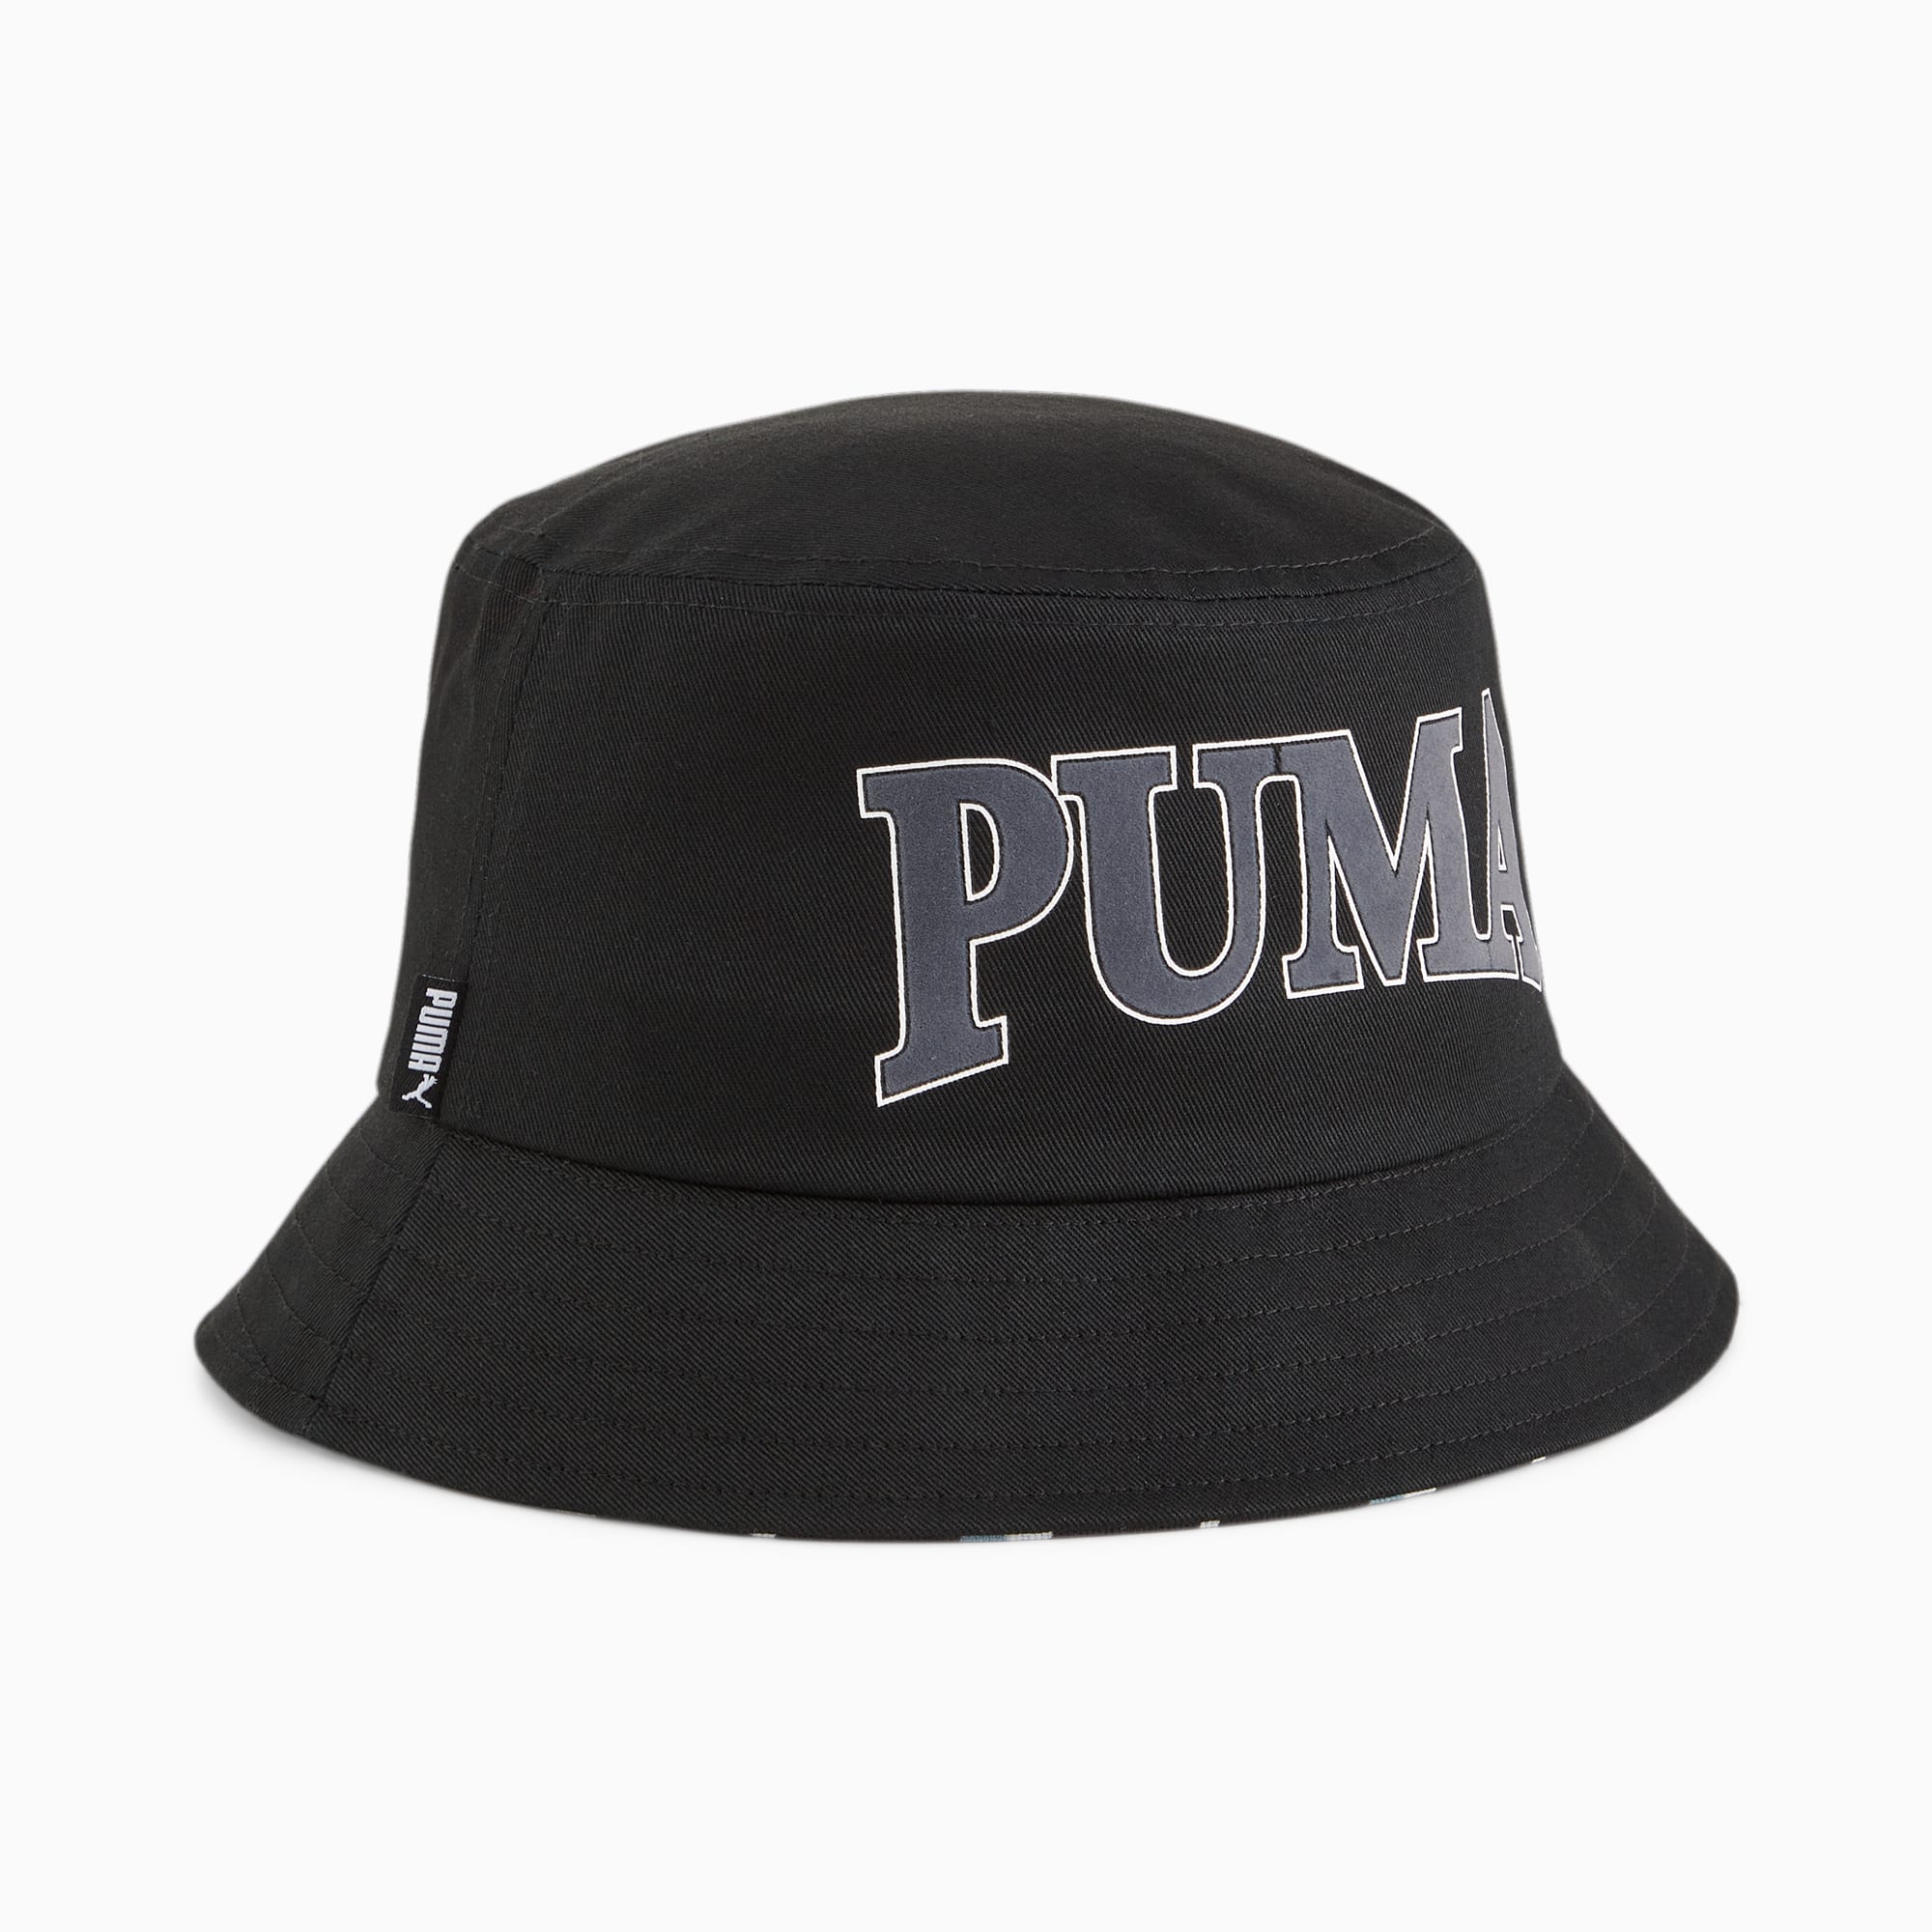 Puma Ess Elevated Bucket Hat, Black/Aop, S/M